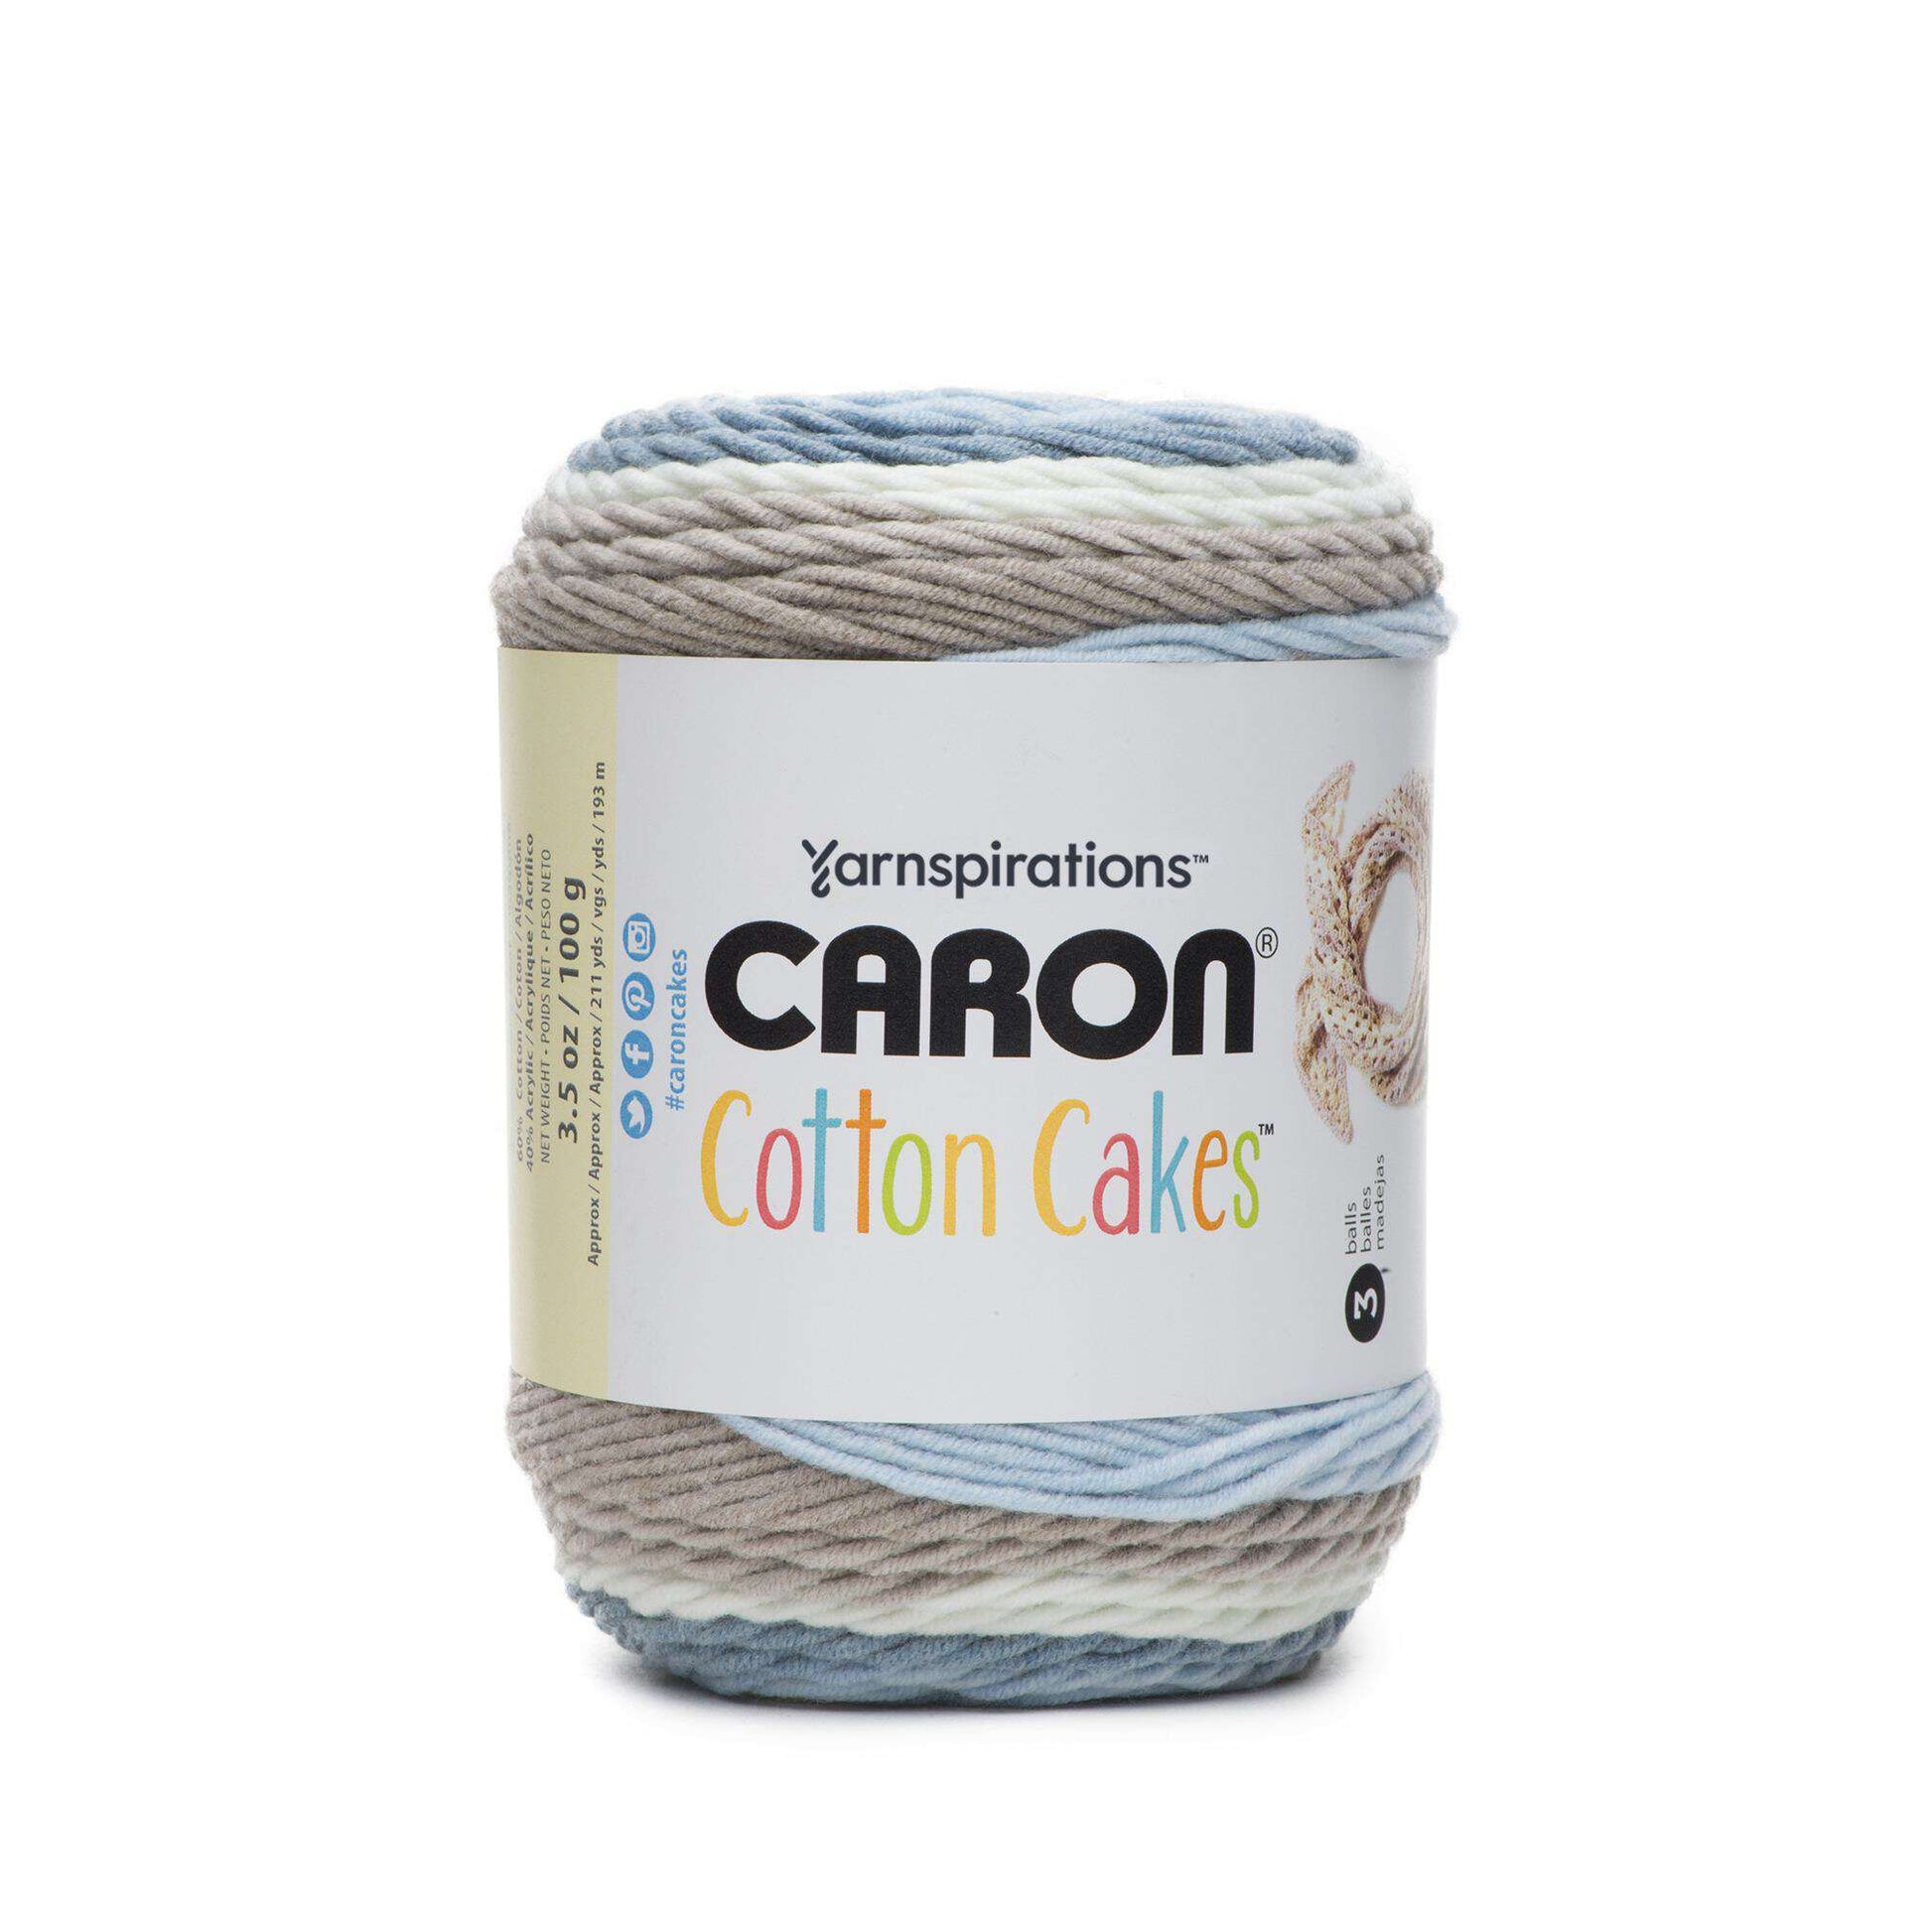 Caron Cotton Cakes Yarn, Retailer Exclusive